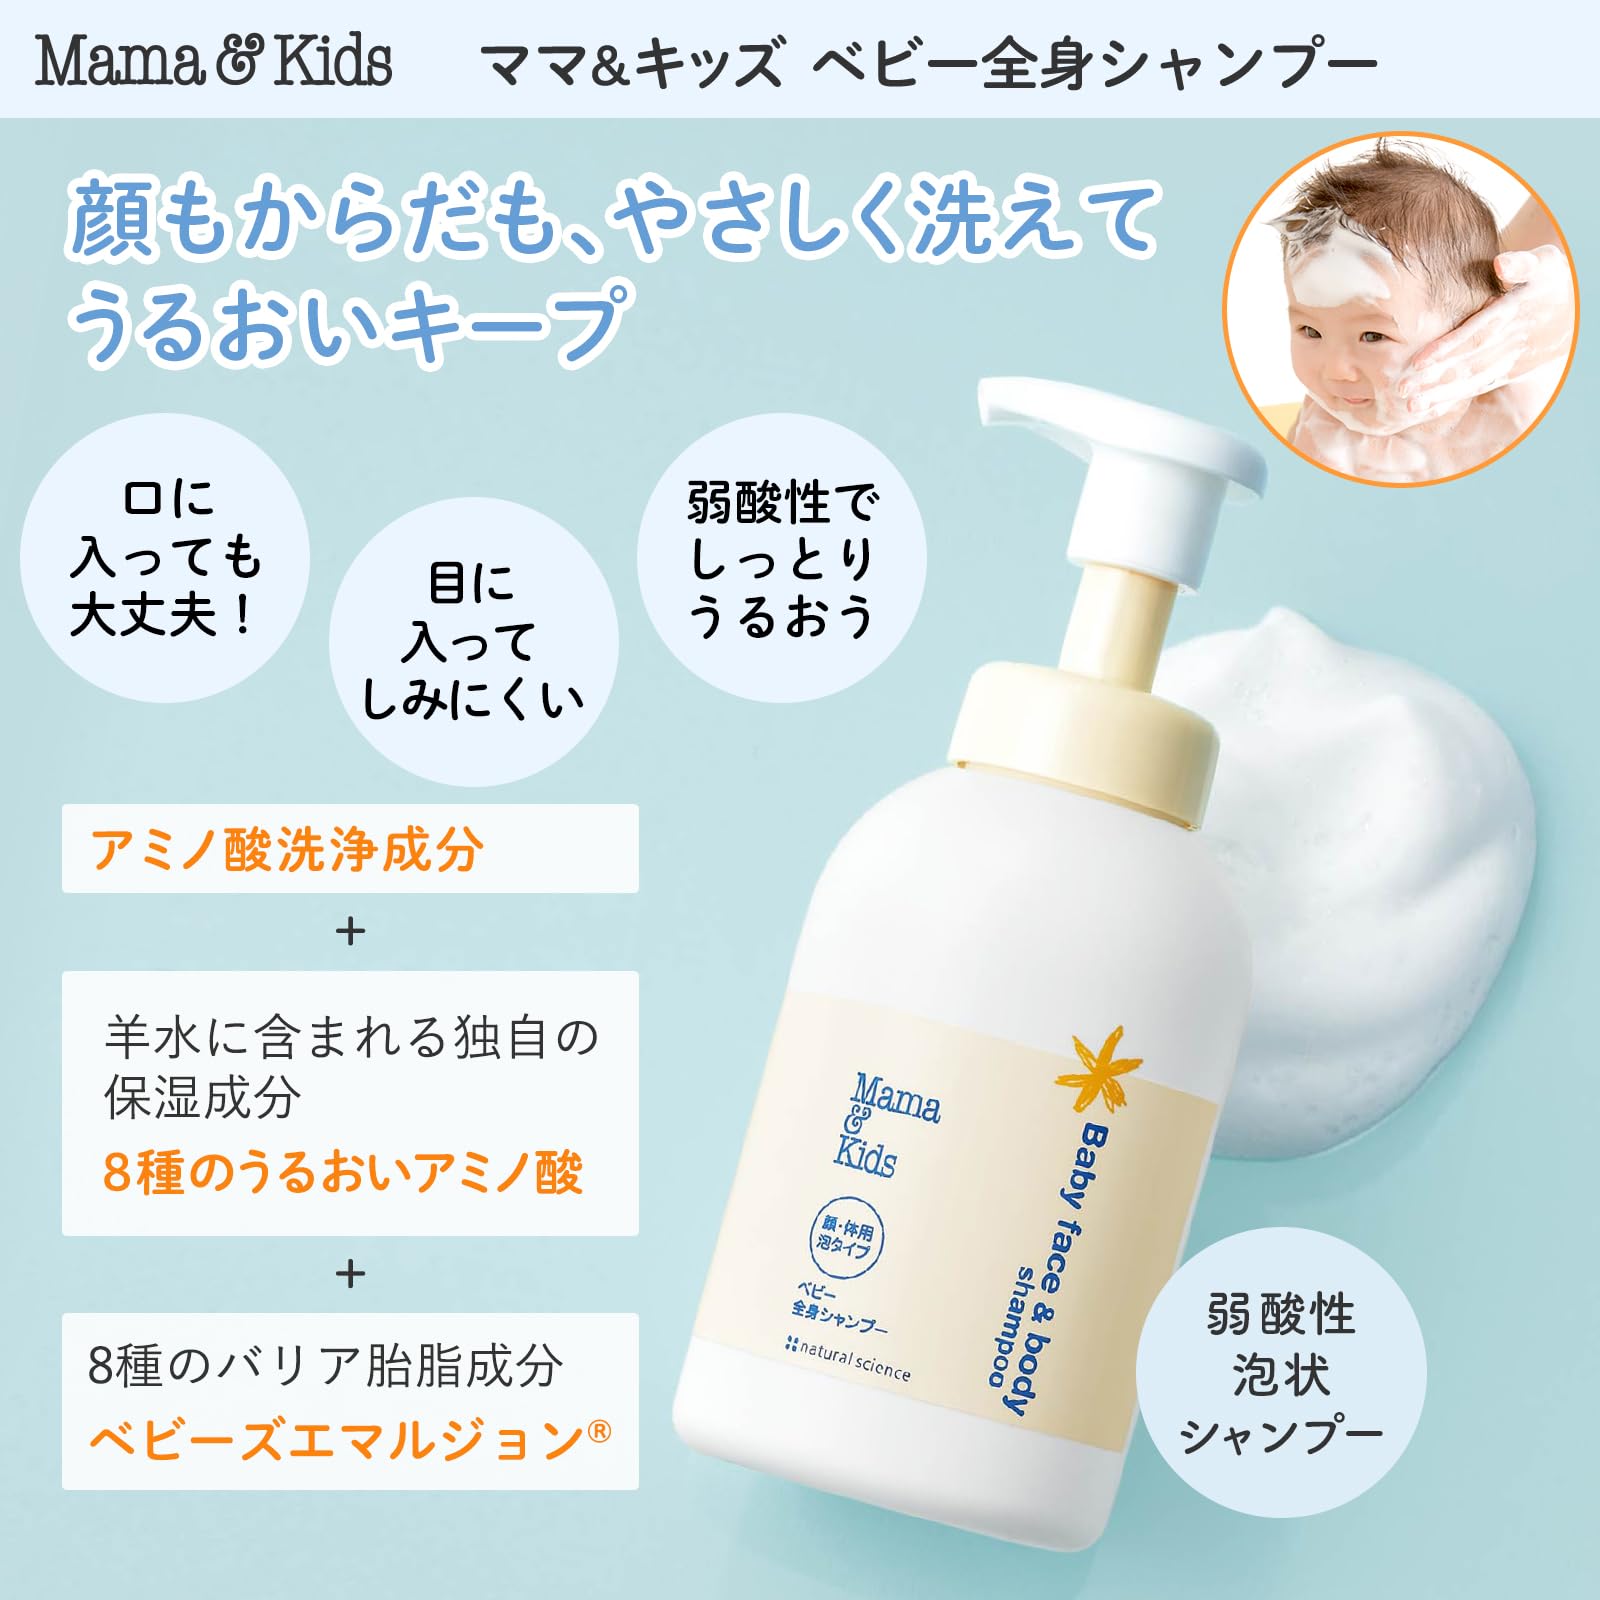 Mama & Kids Baby Full Body Shampoo, 16.2 fl oz (460 ml), Hypoallergenic Skin Care, Whole Body Soap, Additive-Free, Newborn, Foam Type